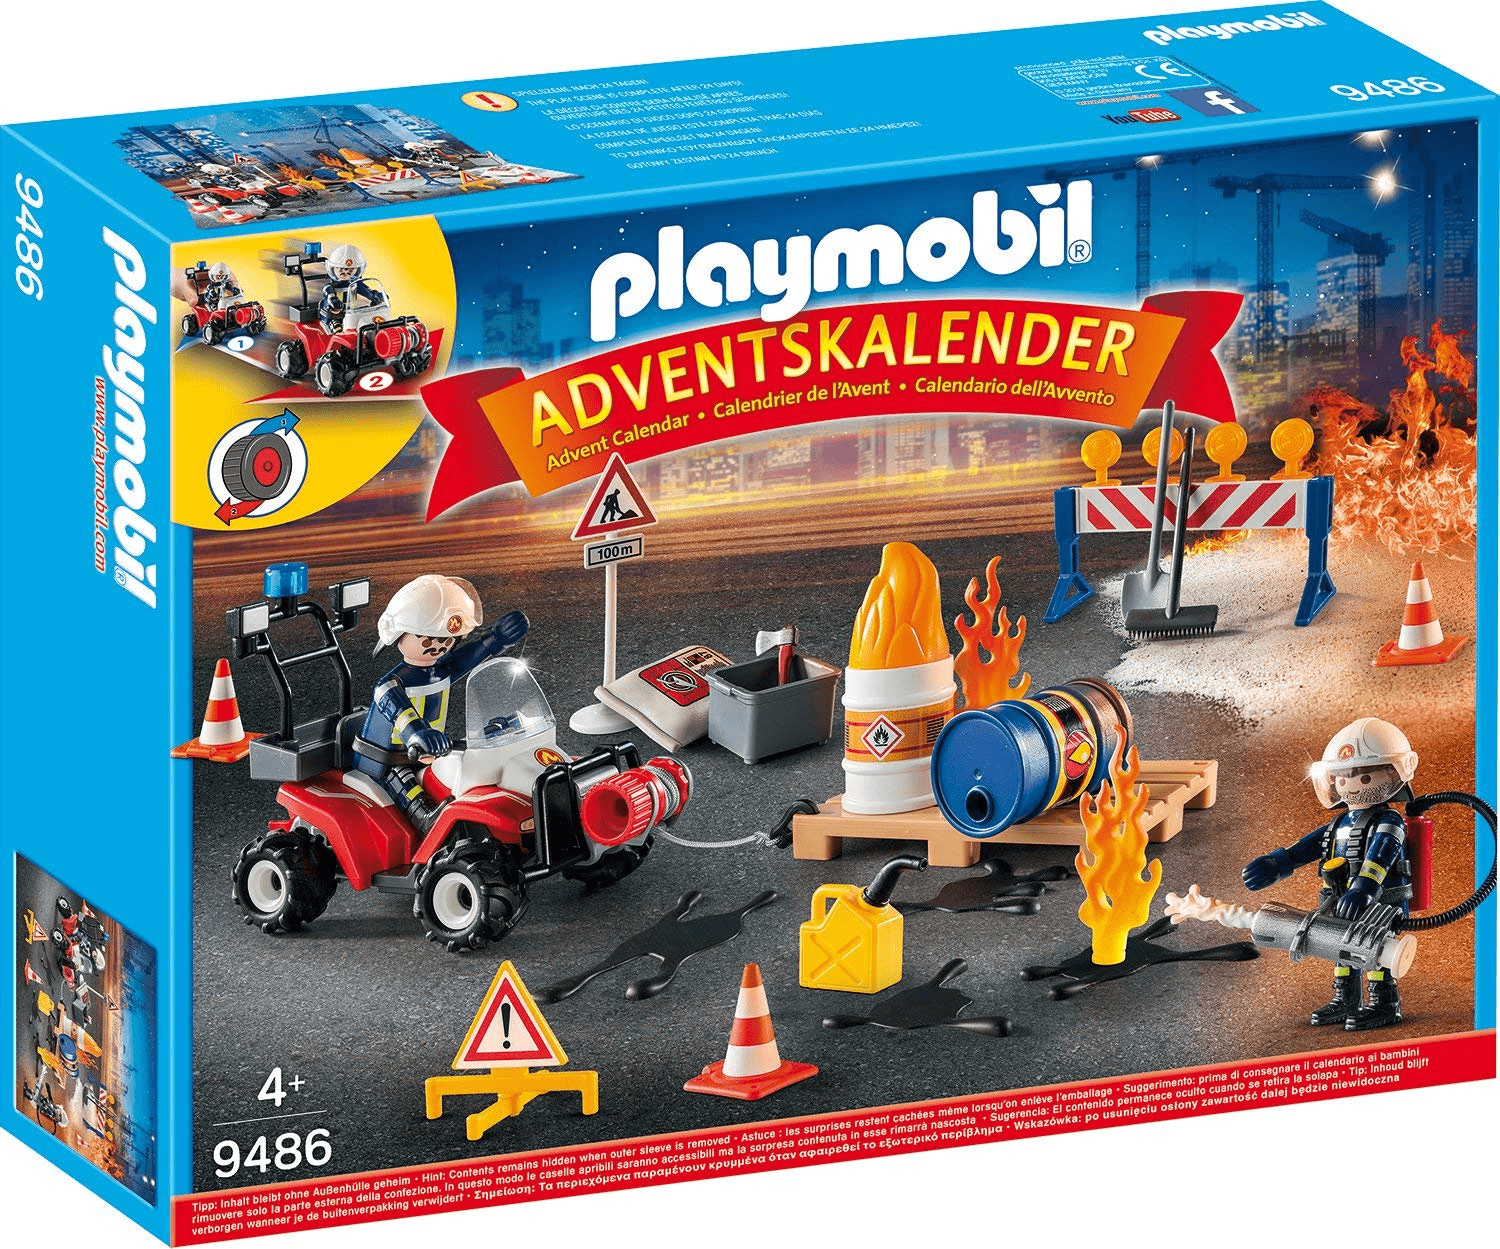 Playmobil 2018 Calendars Coming Soon! - Hello Subscription